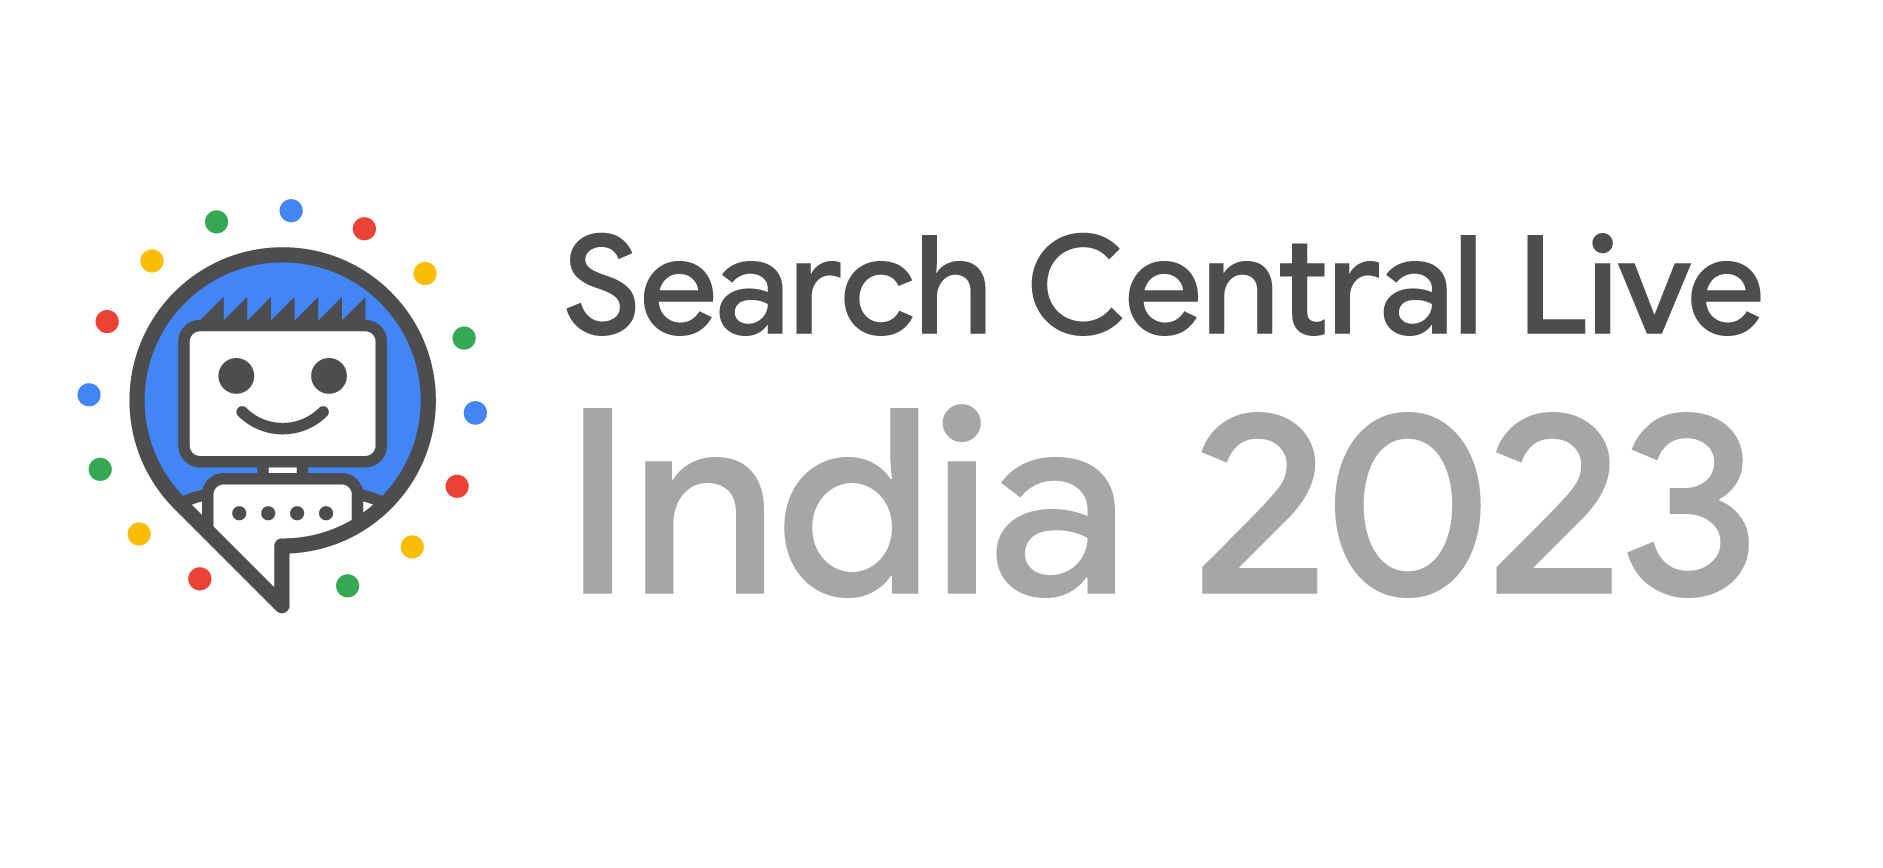 Search Central Live India 2023